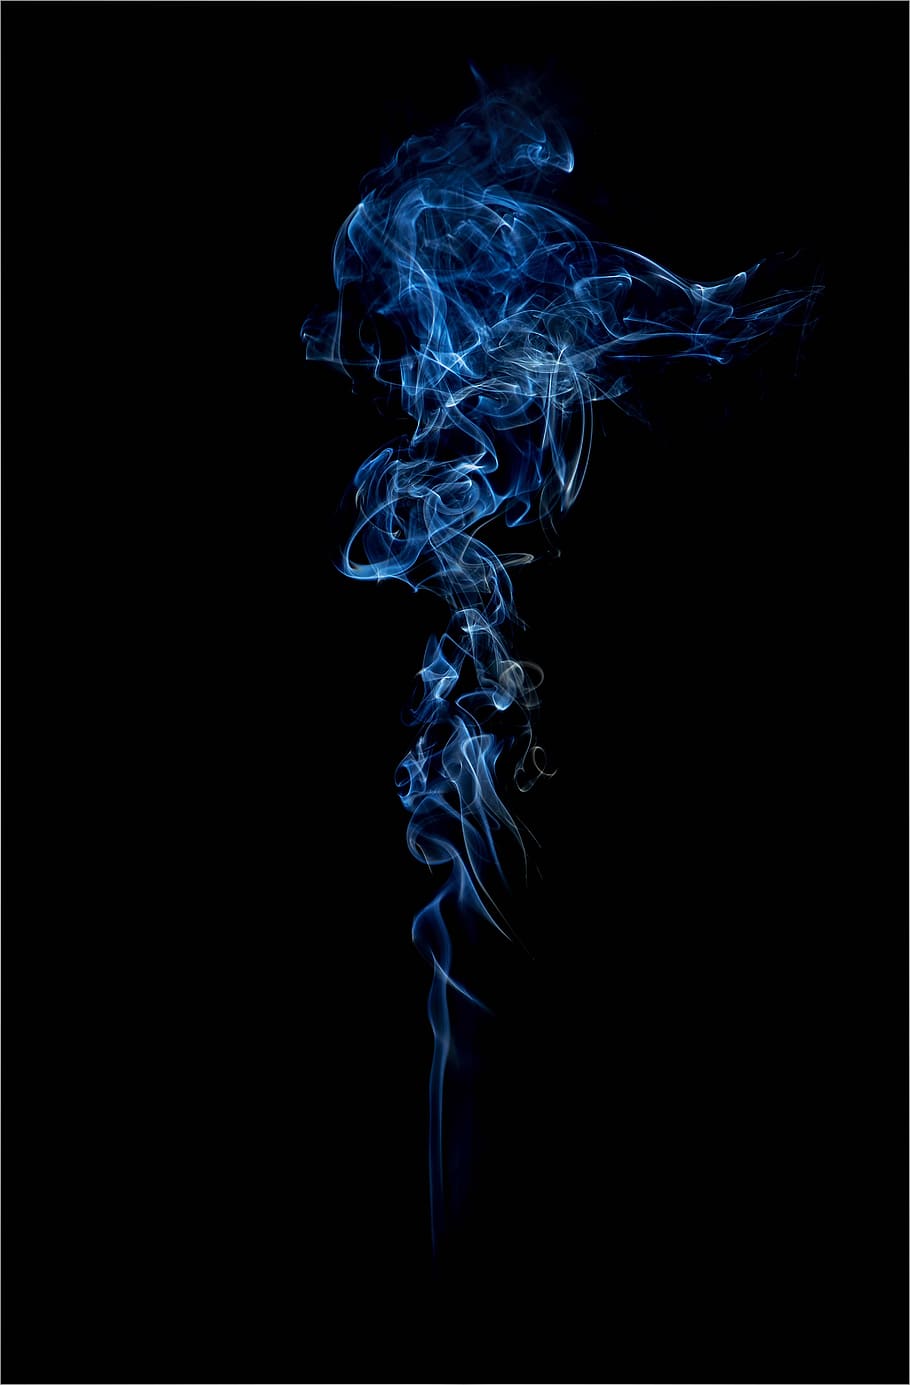 fumo, azul, incenso, trilhas, fundo preto, fumaça - estrutura física, tiro do estúdio, movimento, dentro de casa, abstrato